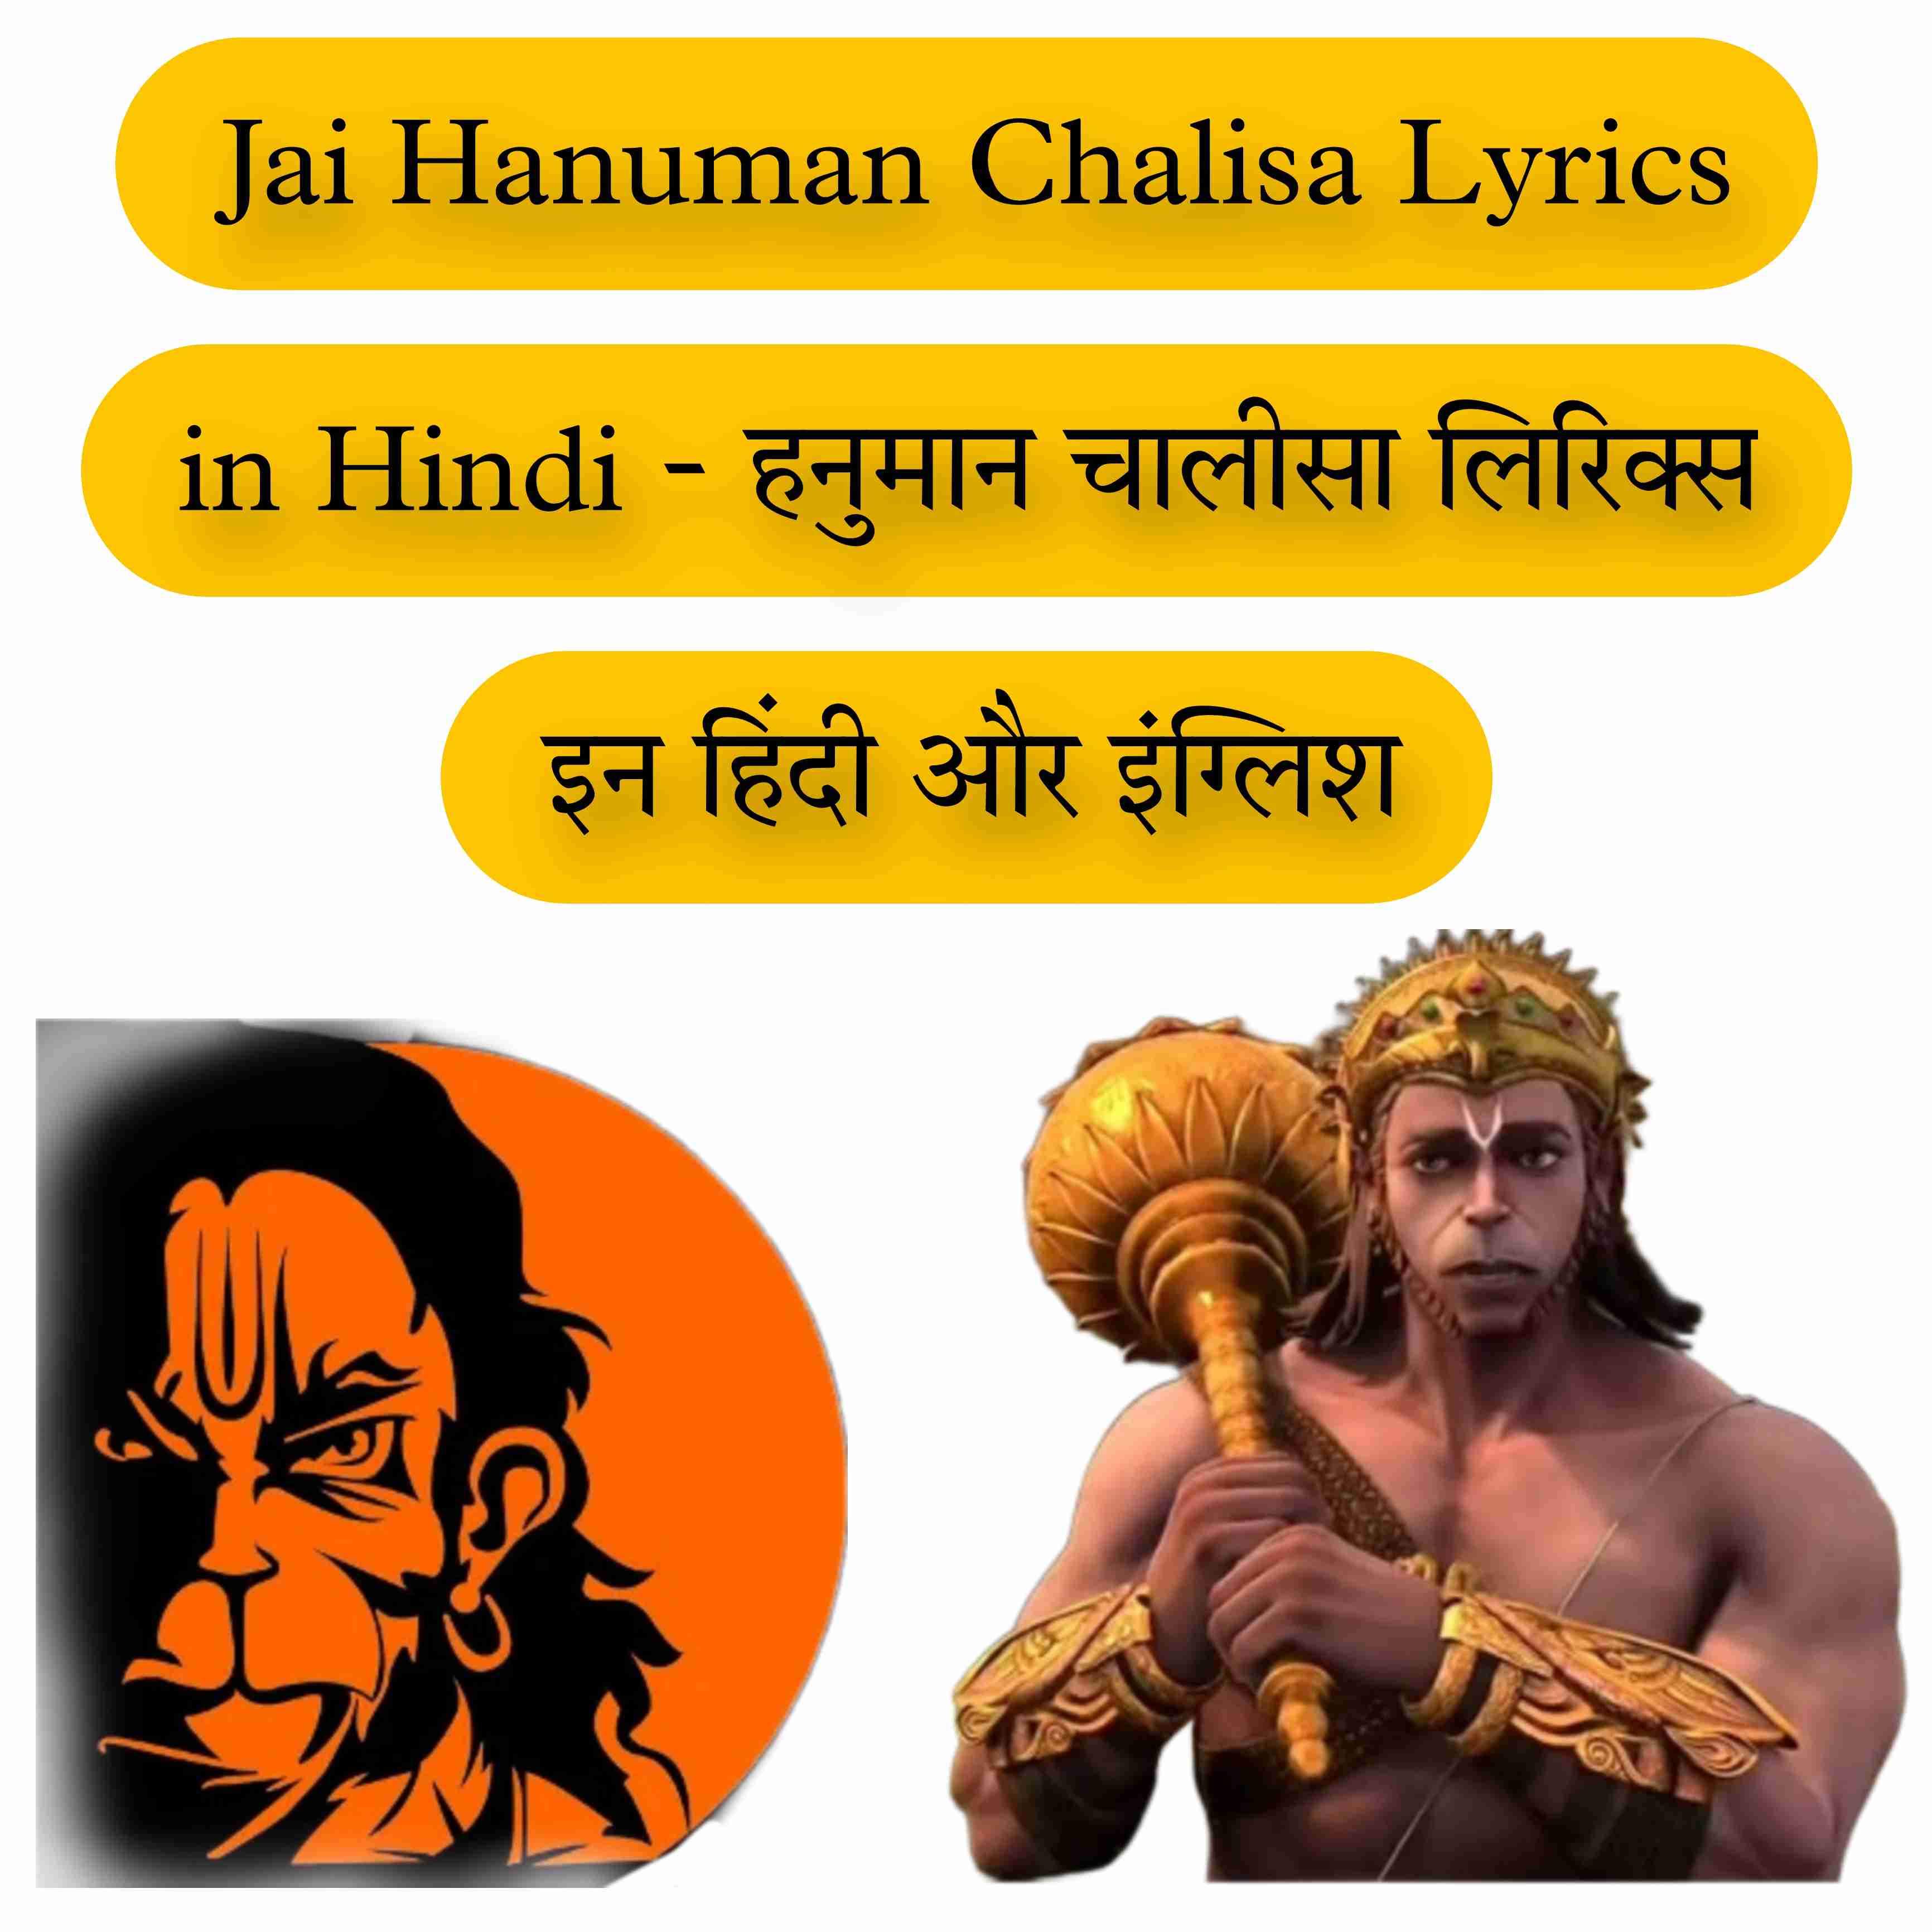 Jai Hanuman Chalisa Lyrics in Hindi